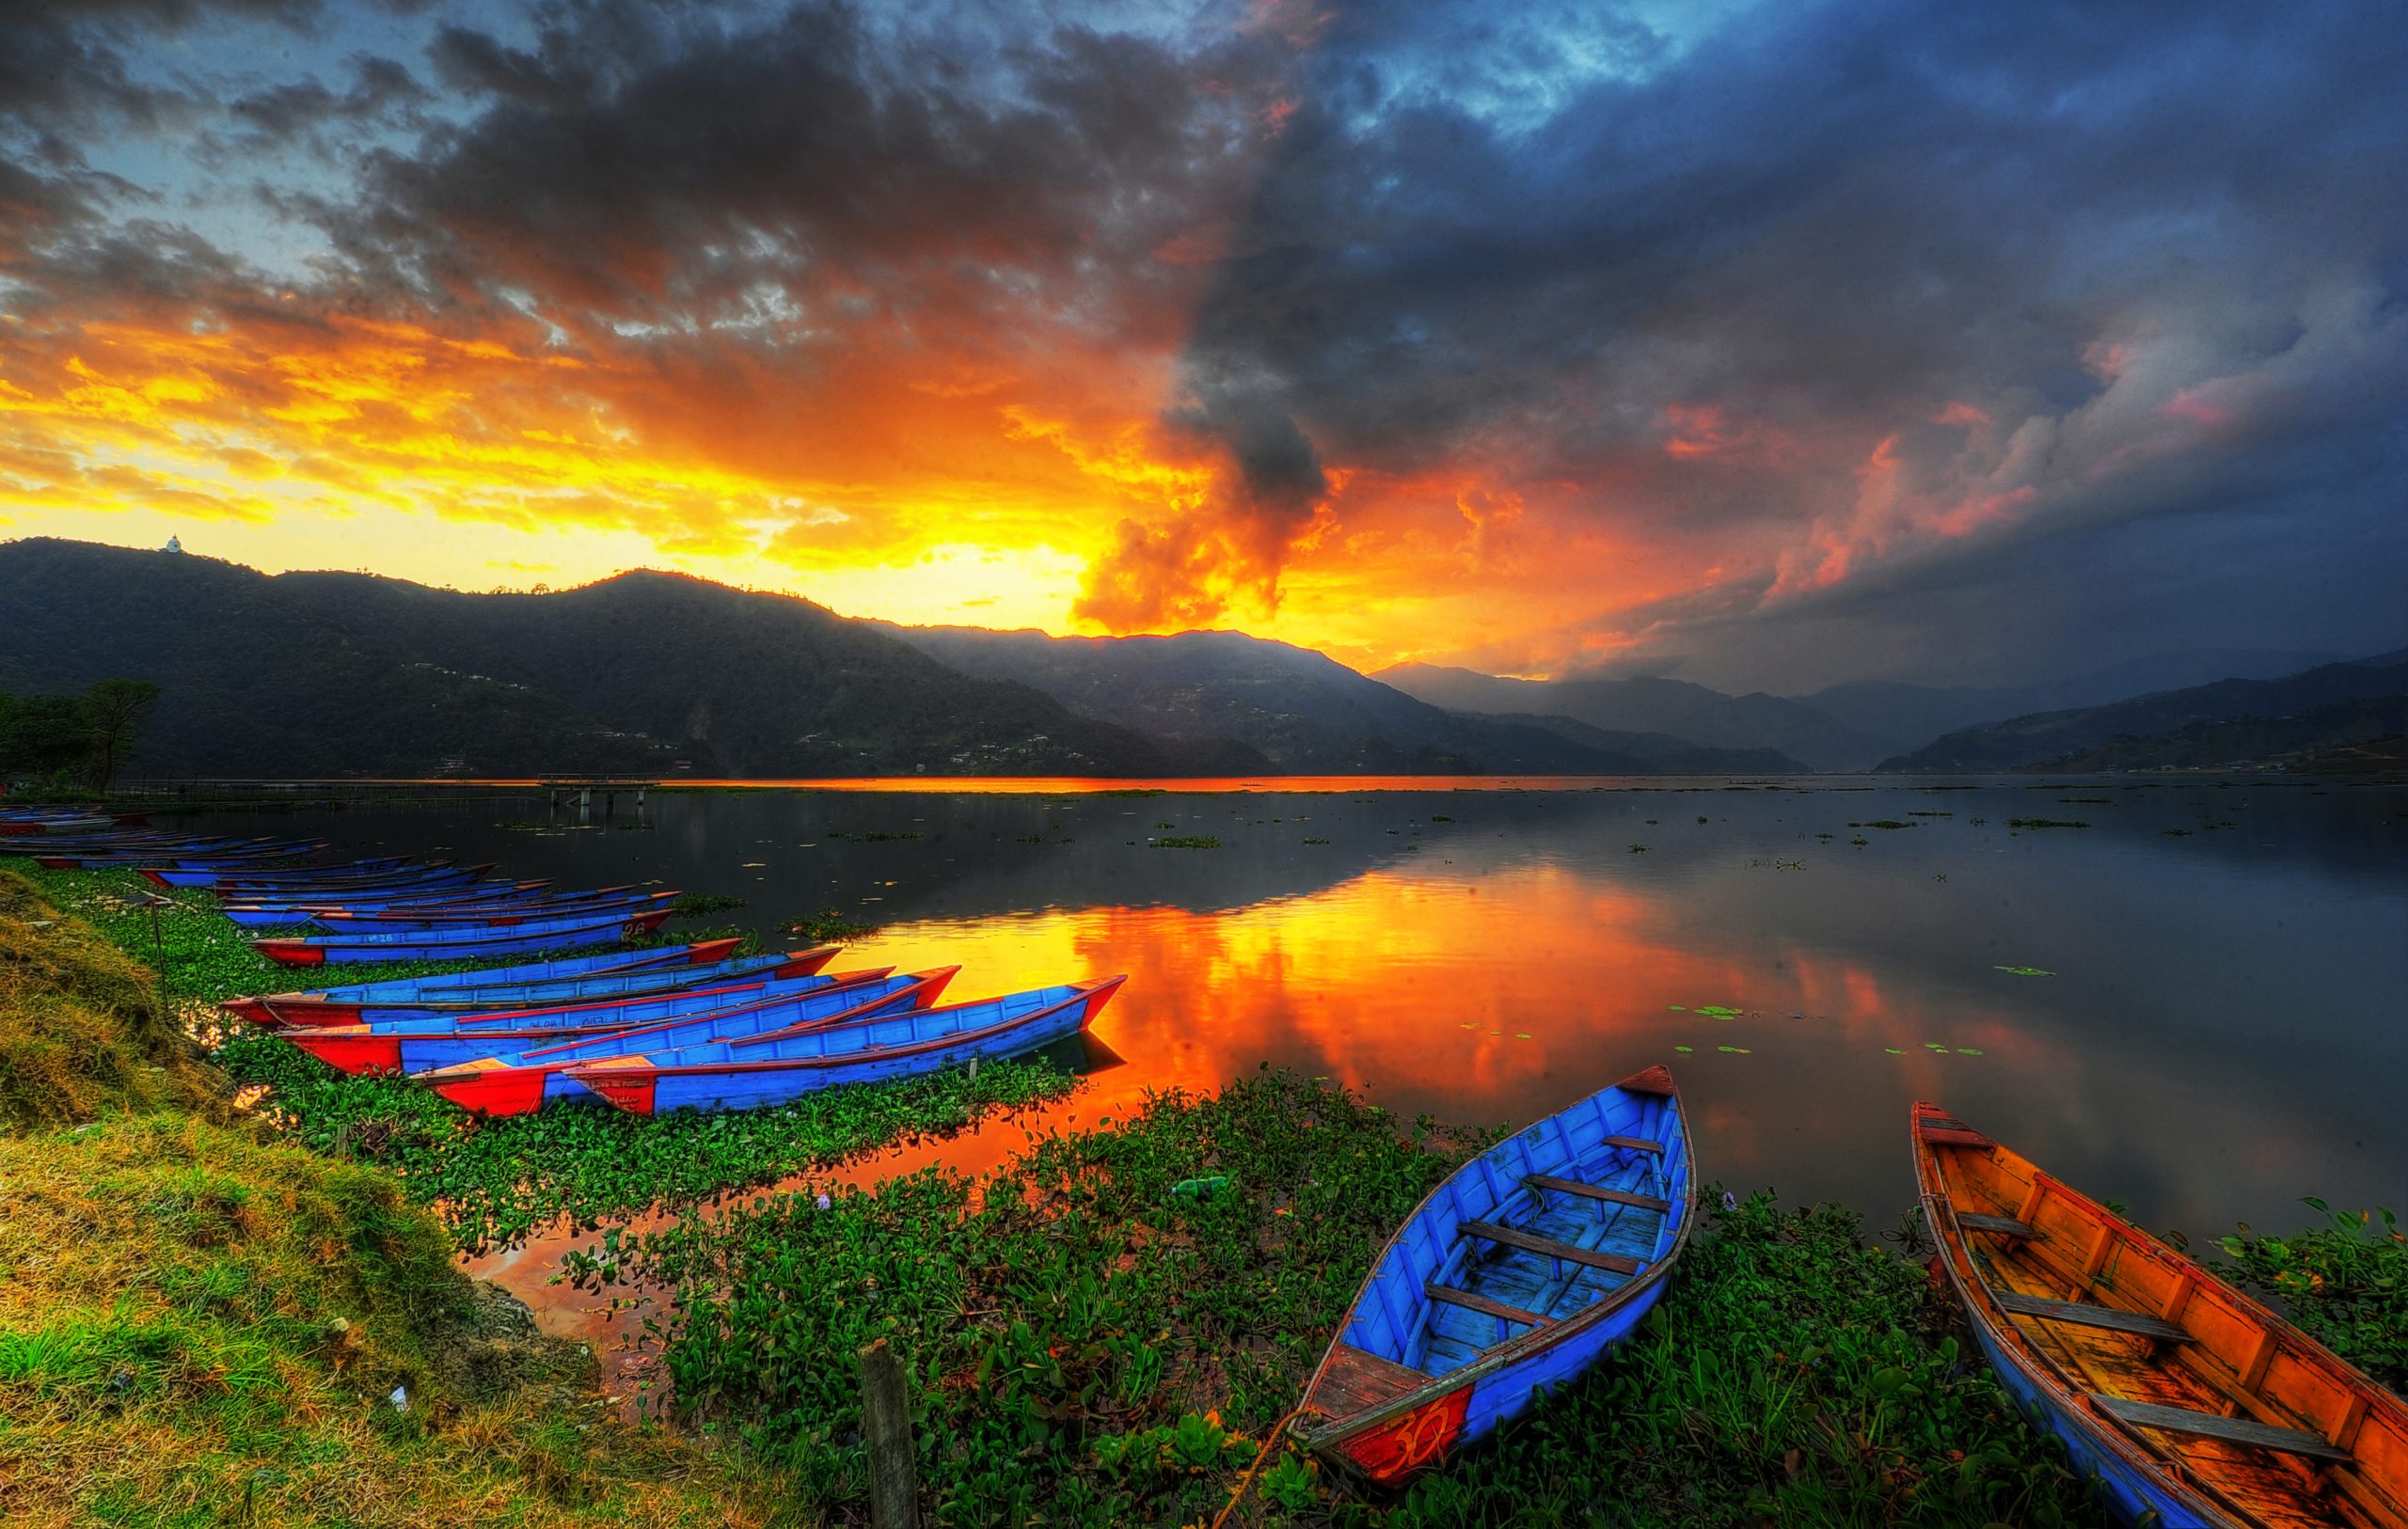 Pokhara: The City of Lakes